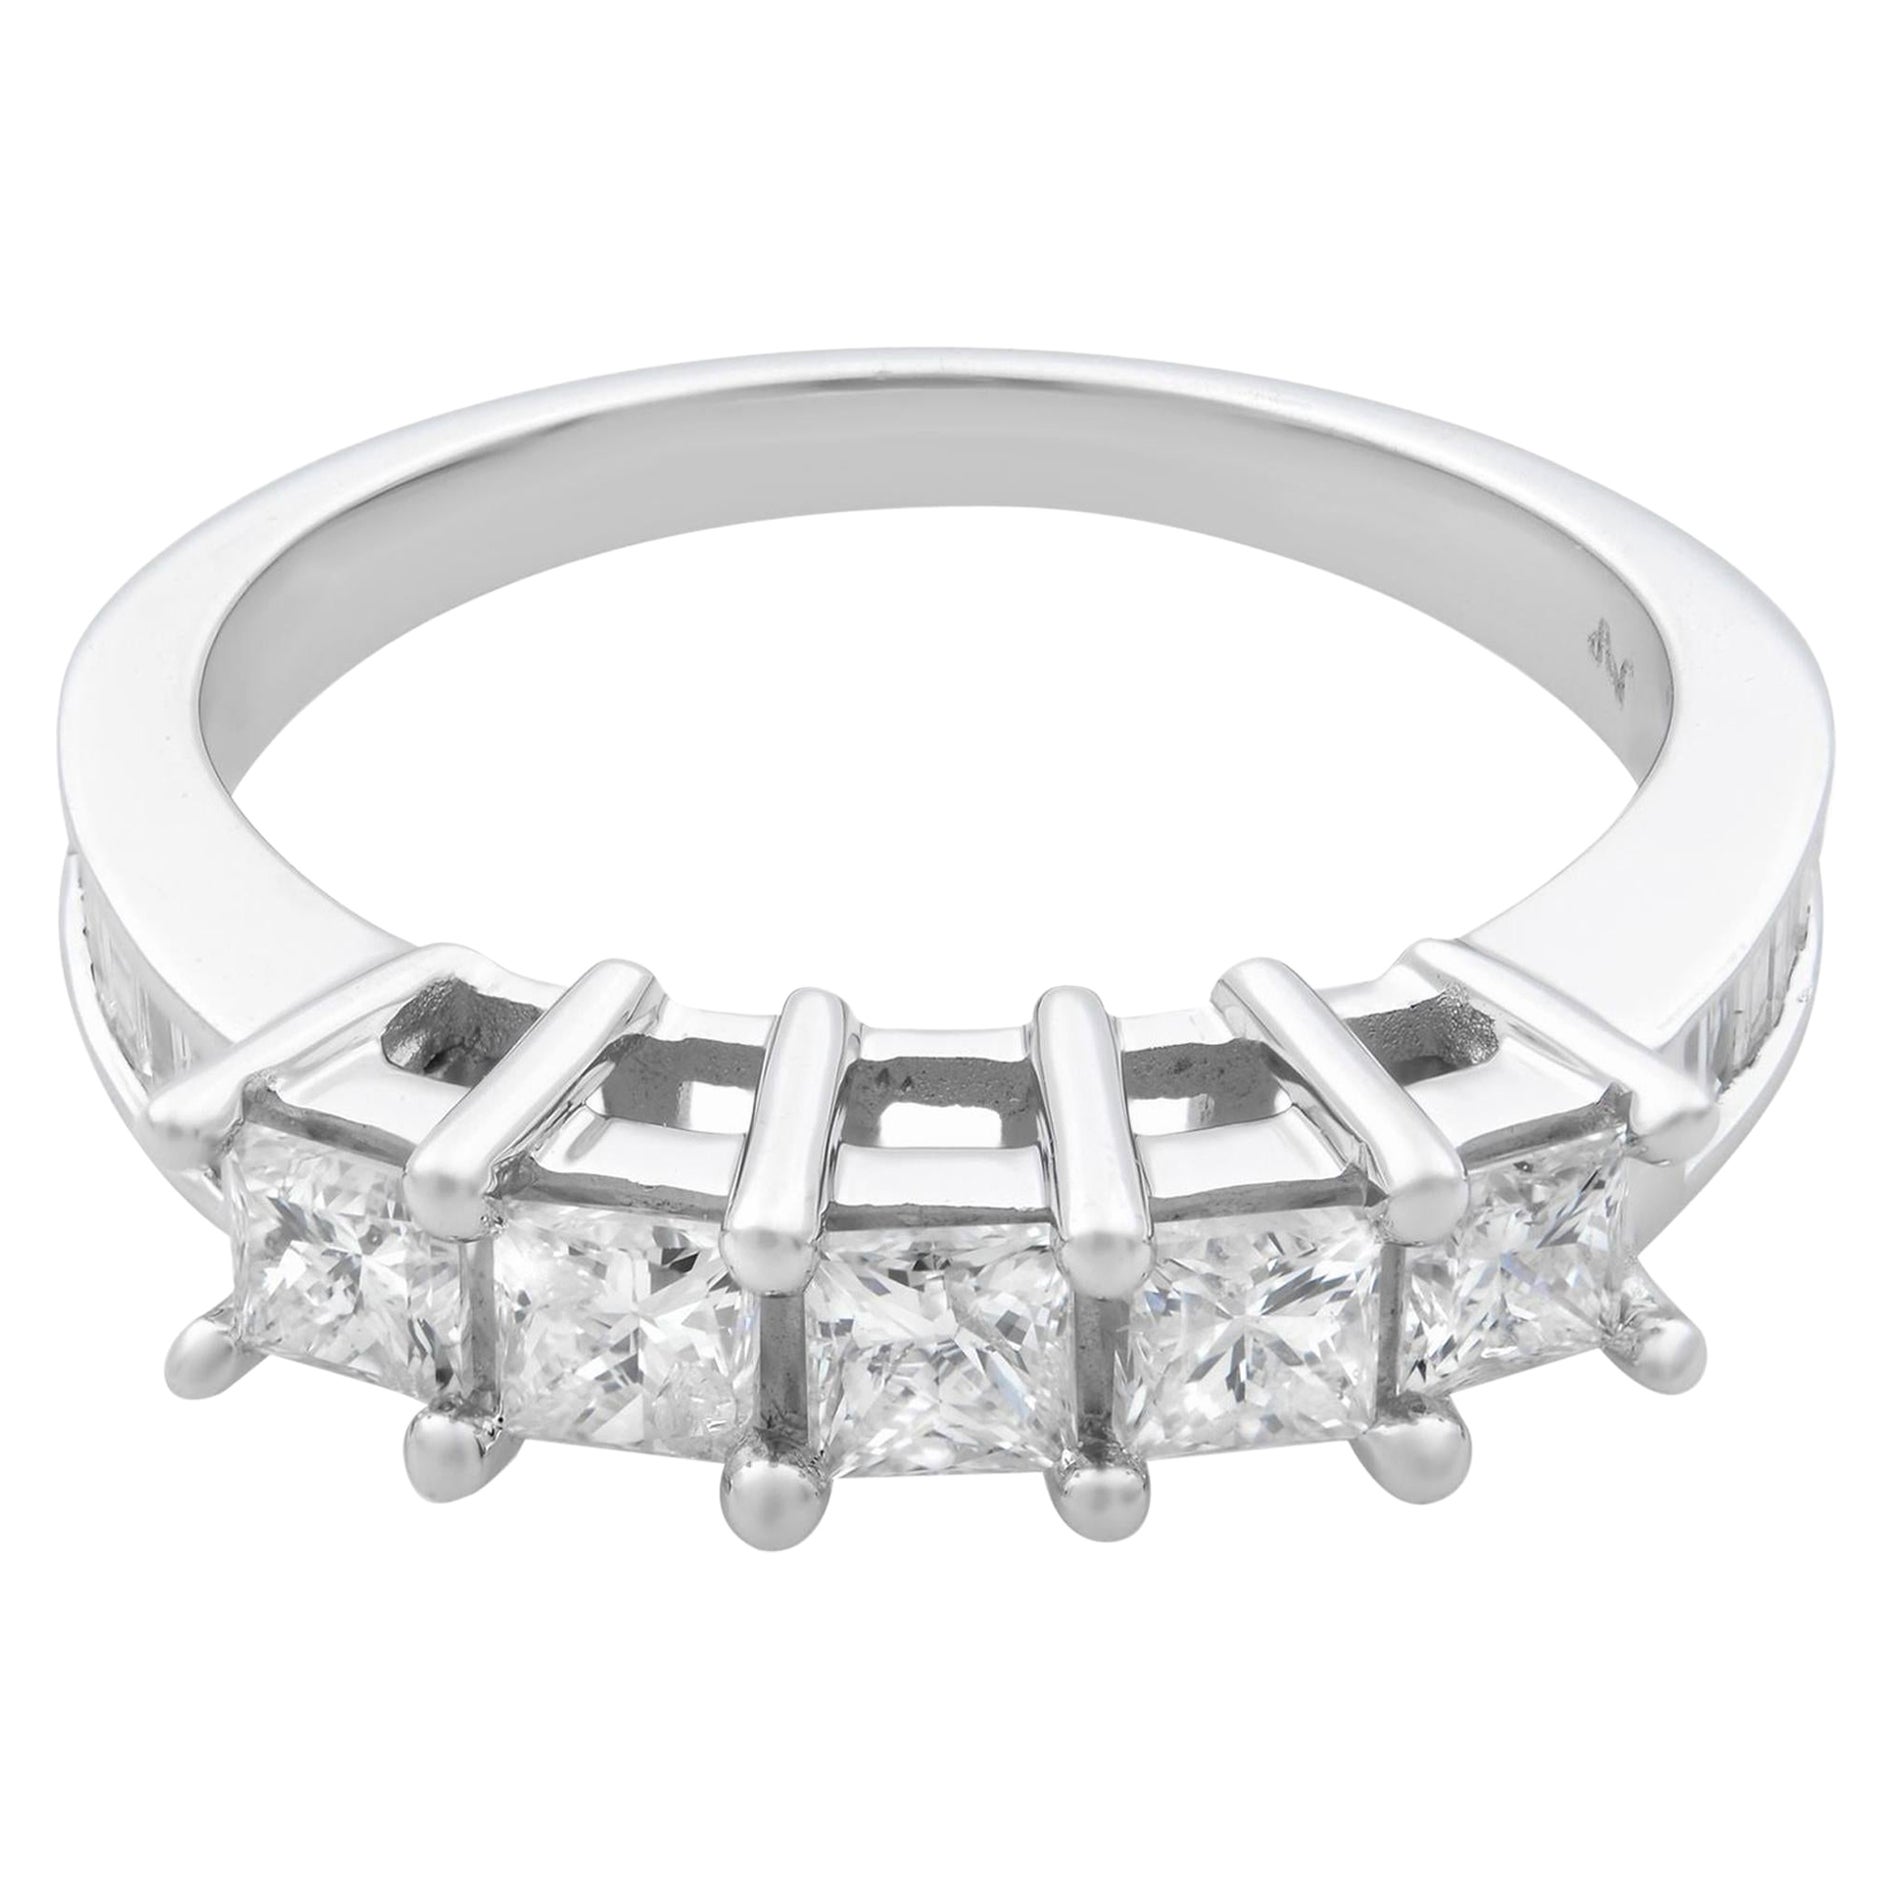 Rachel Koen Princess Cut Diamond Wedding Band Ring 14K White Gold 1.15 Cttw For Sale